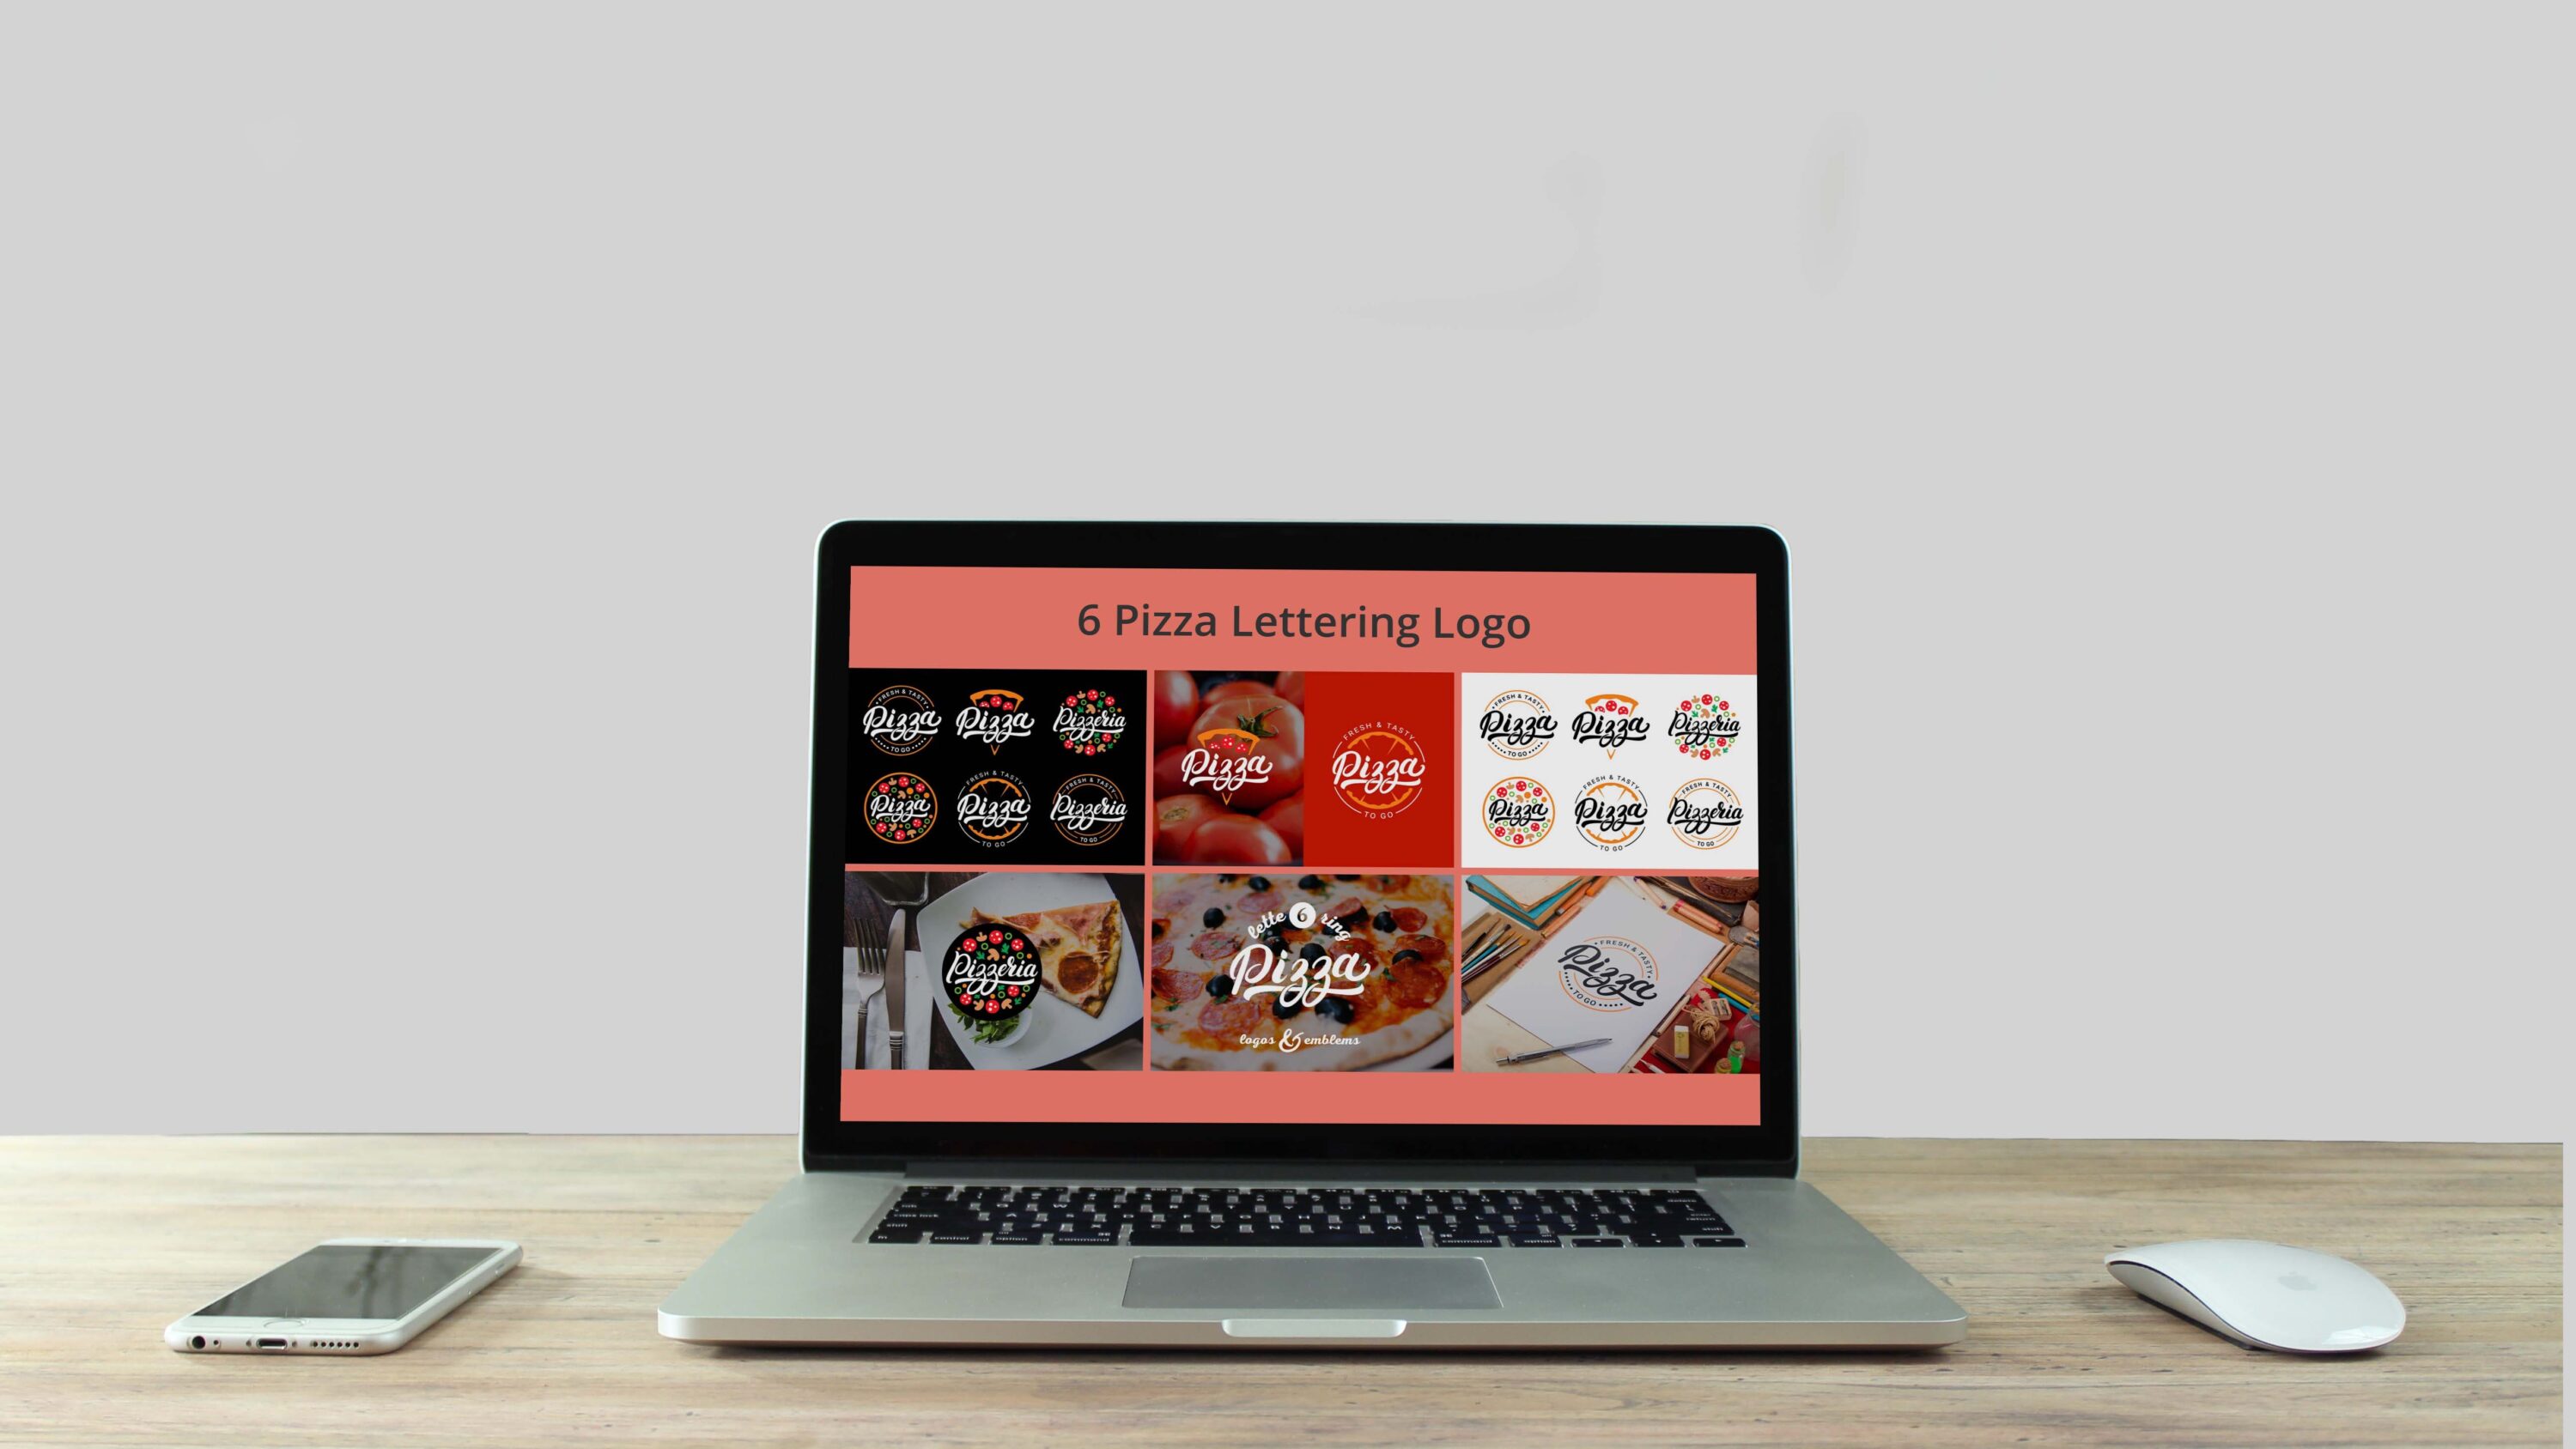 6 Pizza Lettering Logo laptop preview.